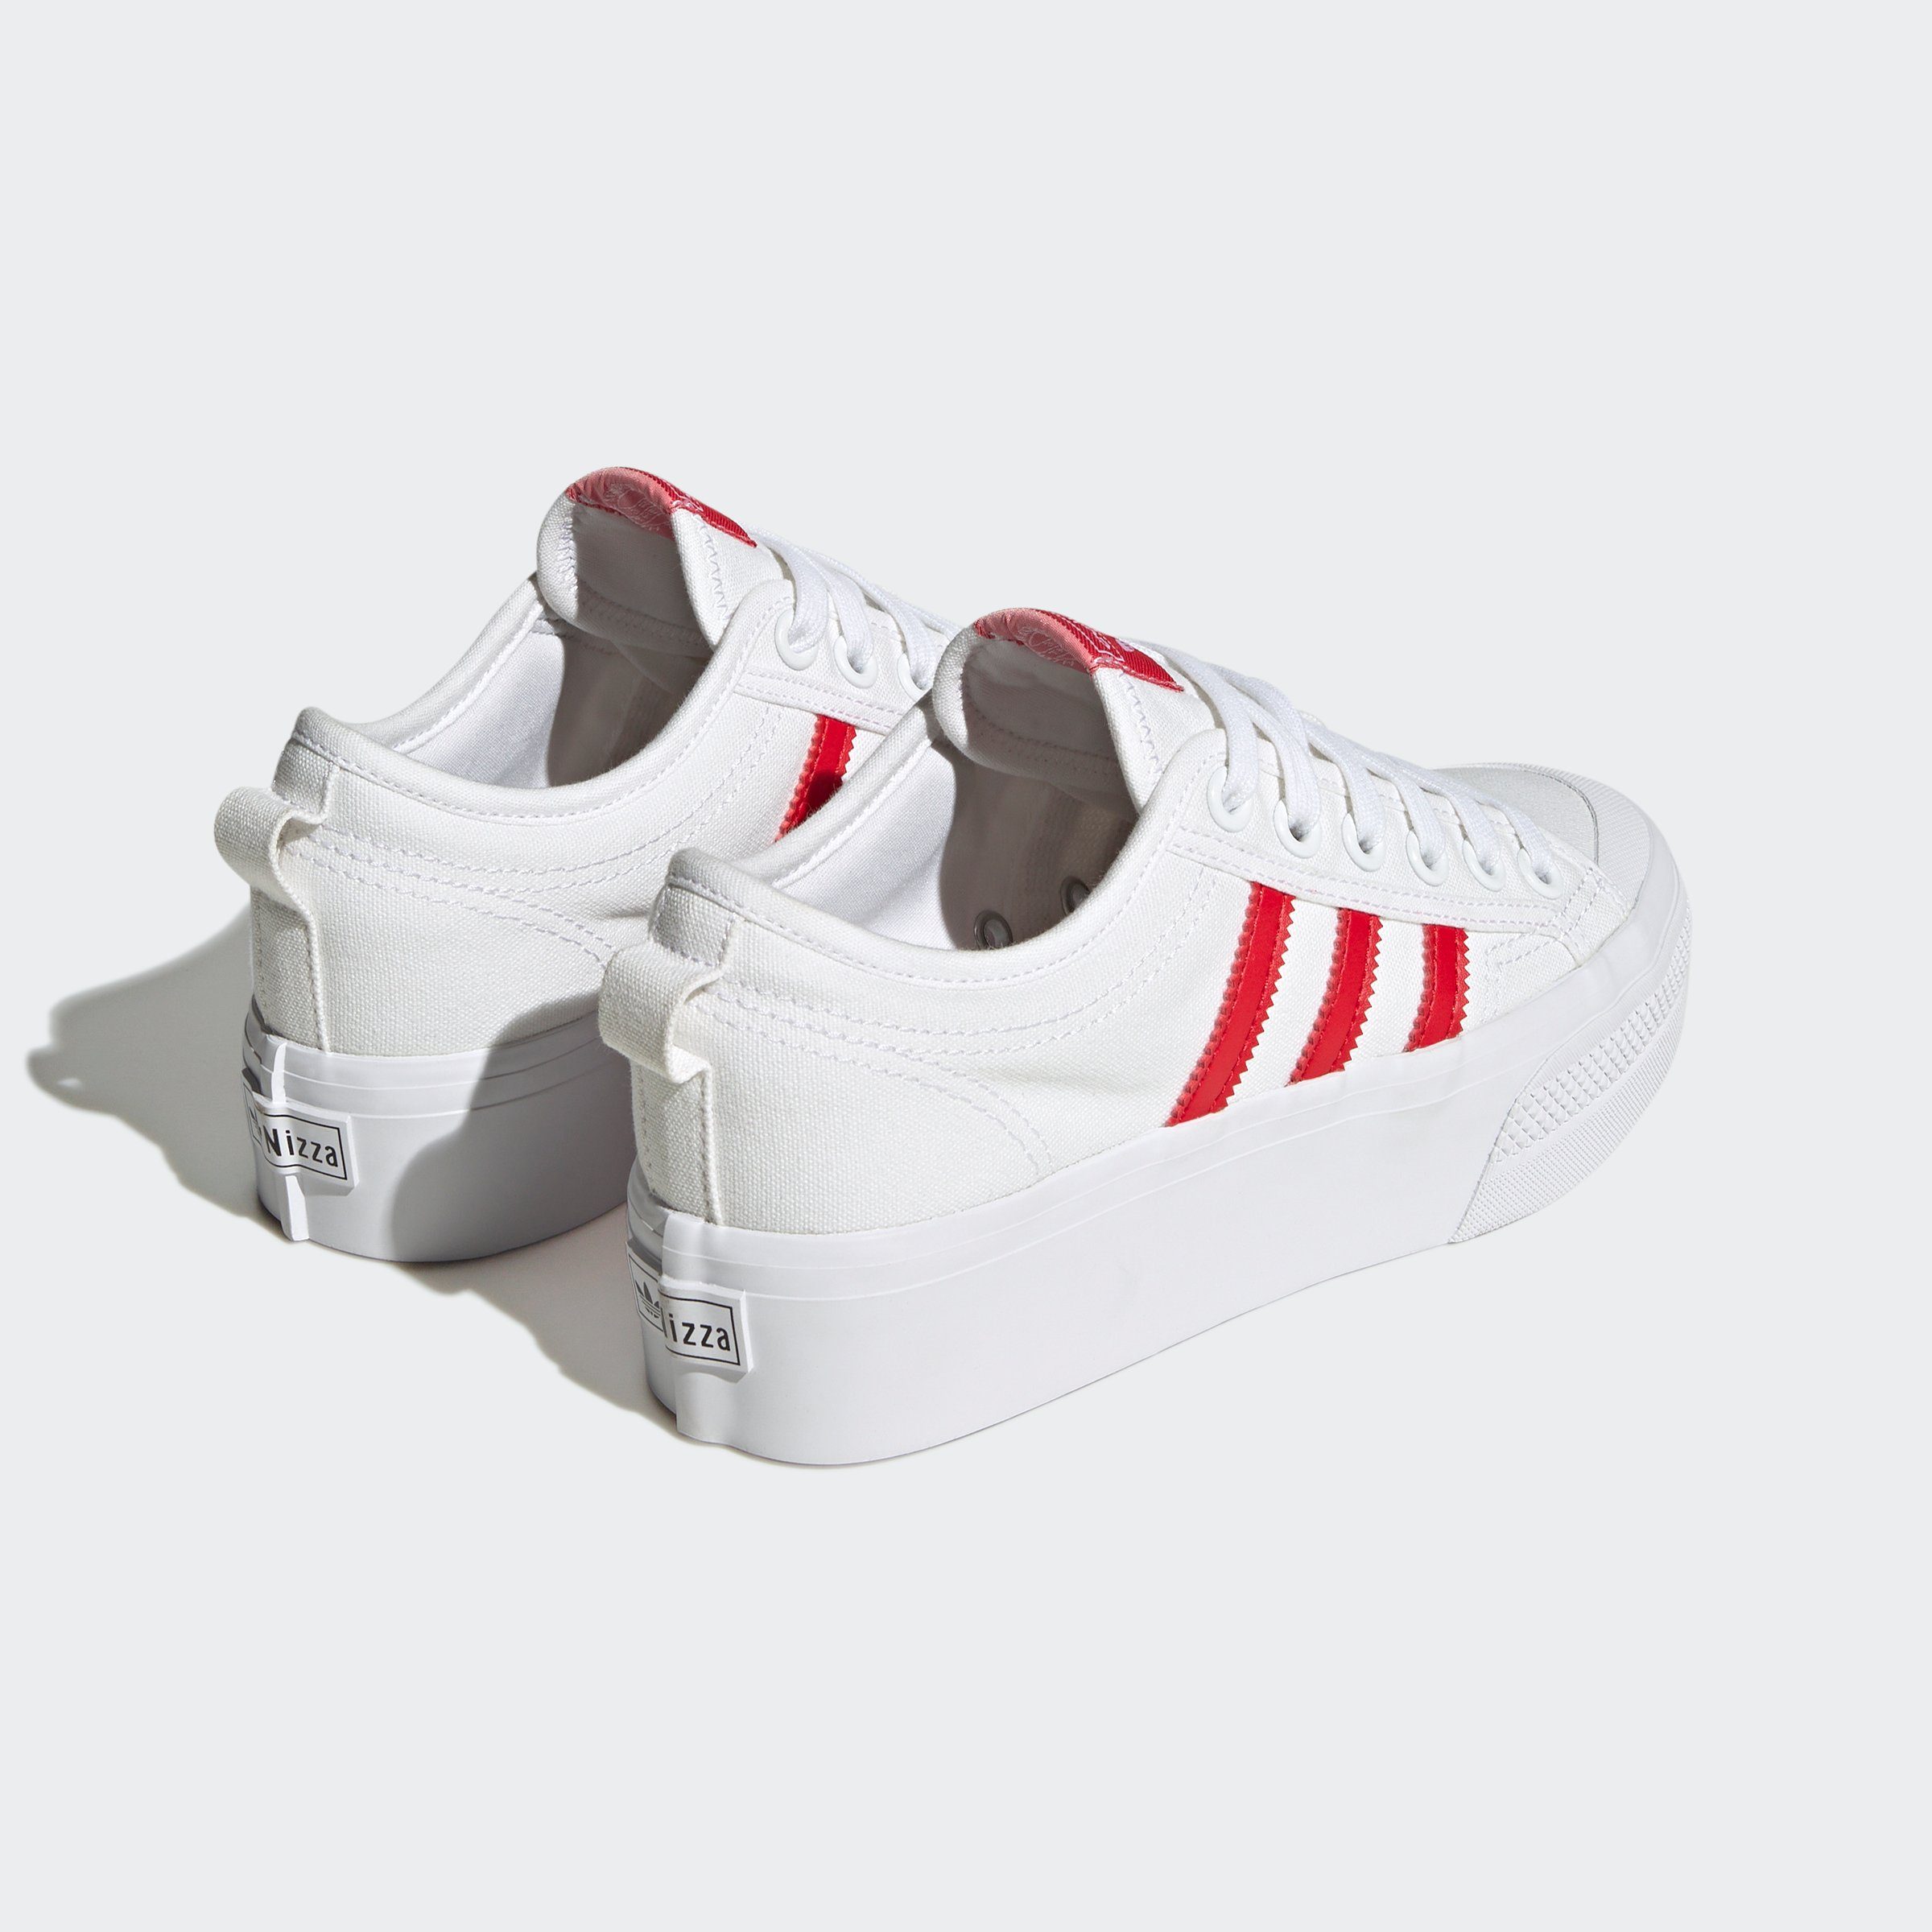 Better PLATFORM Scarlet Sneaker / NIZZA adidas Black / Originals Cloud White Core